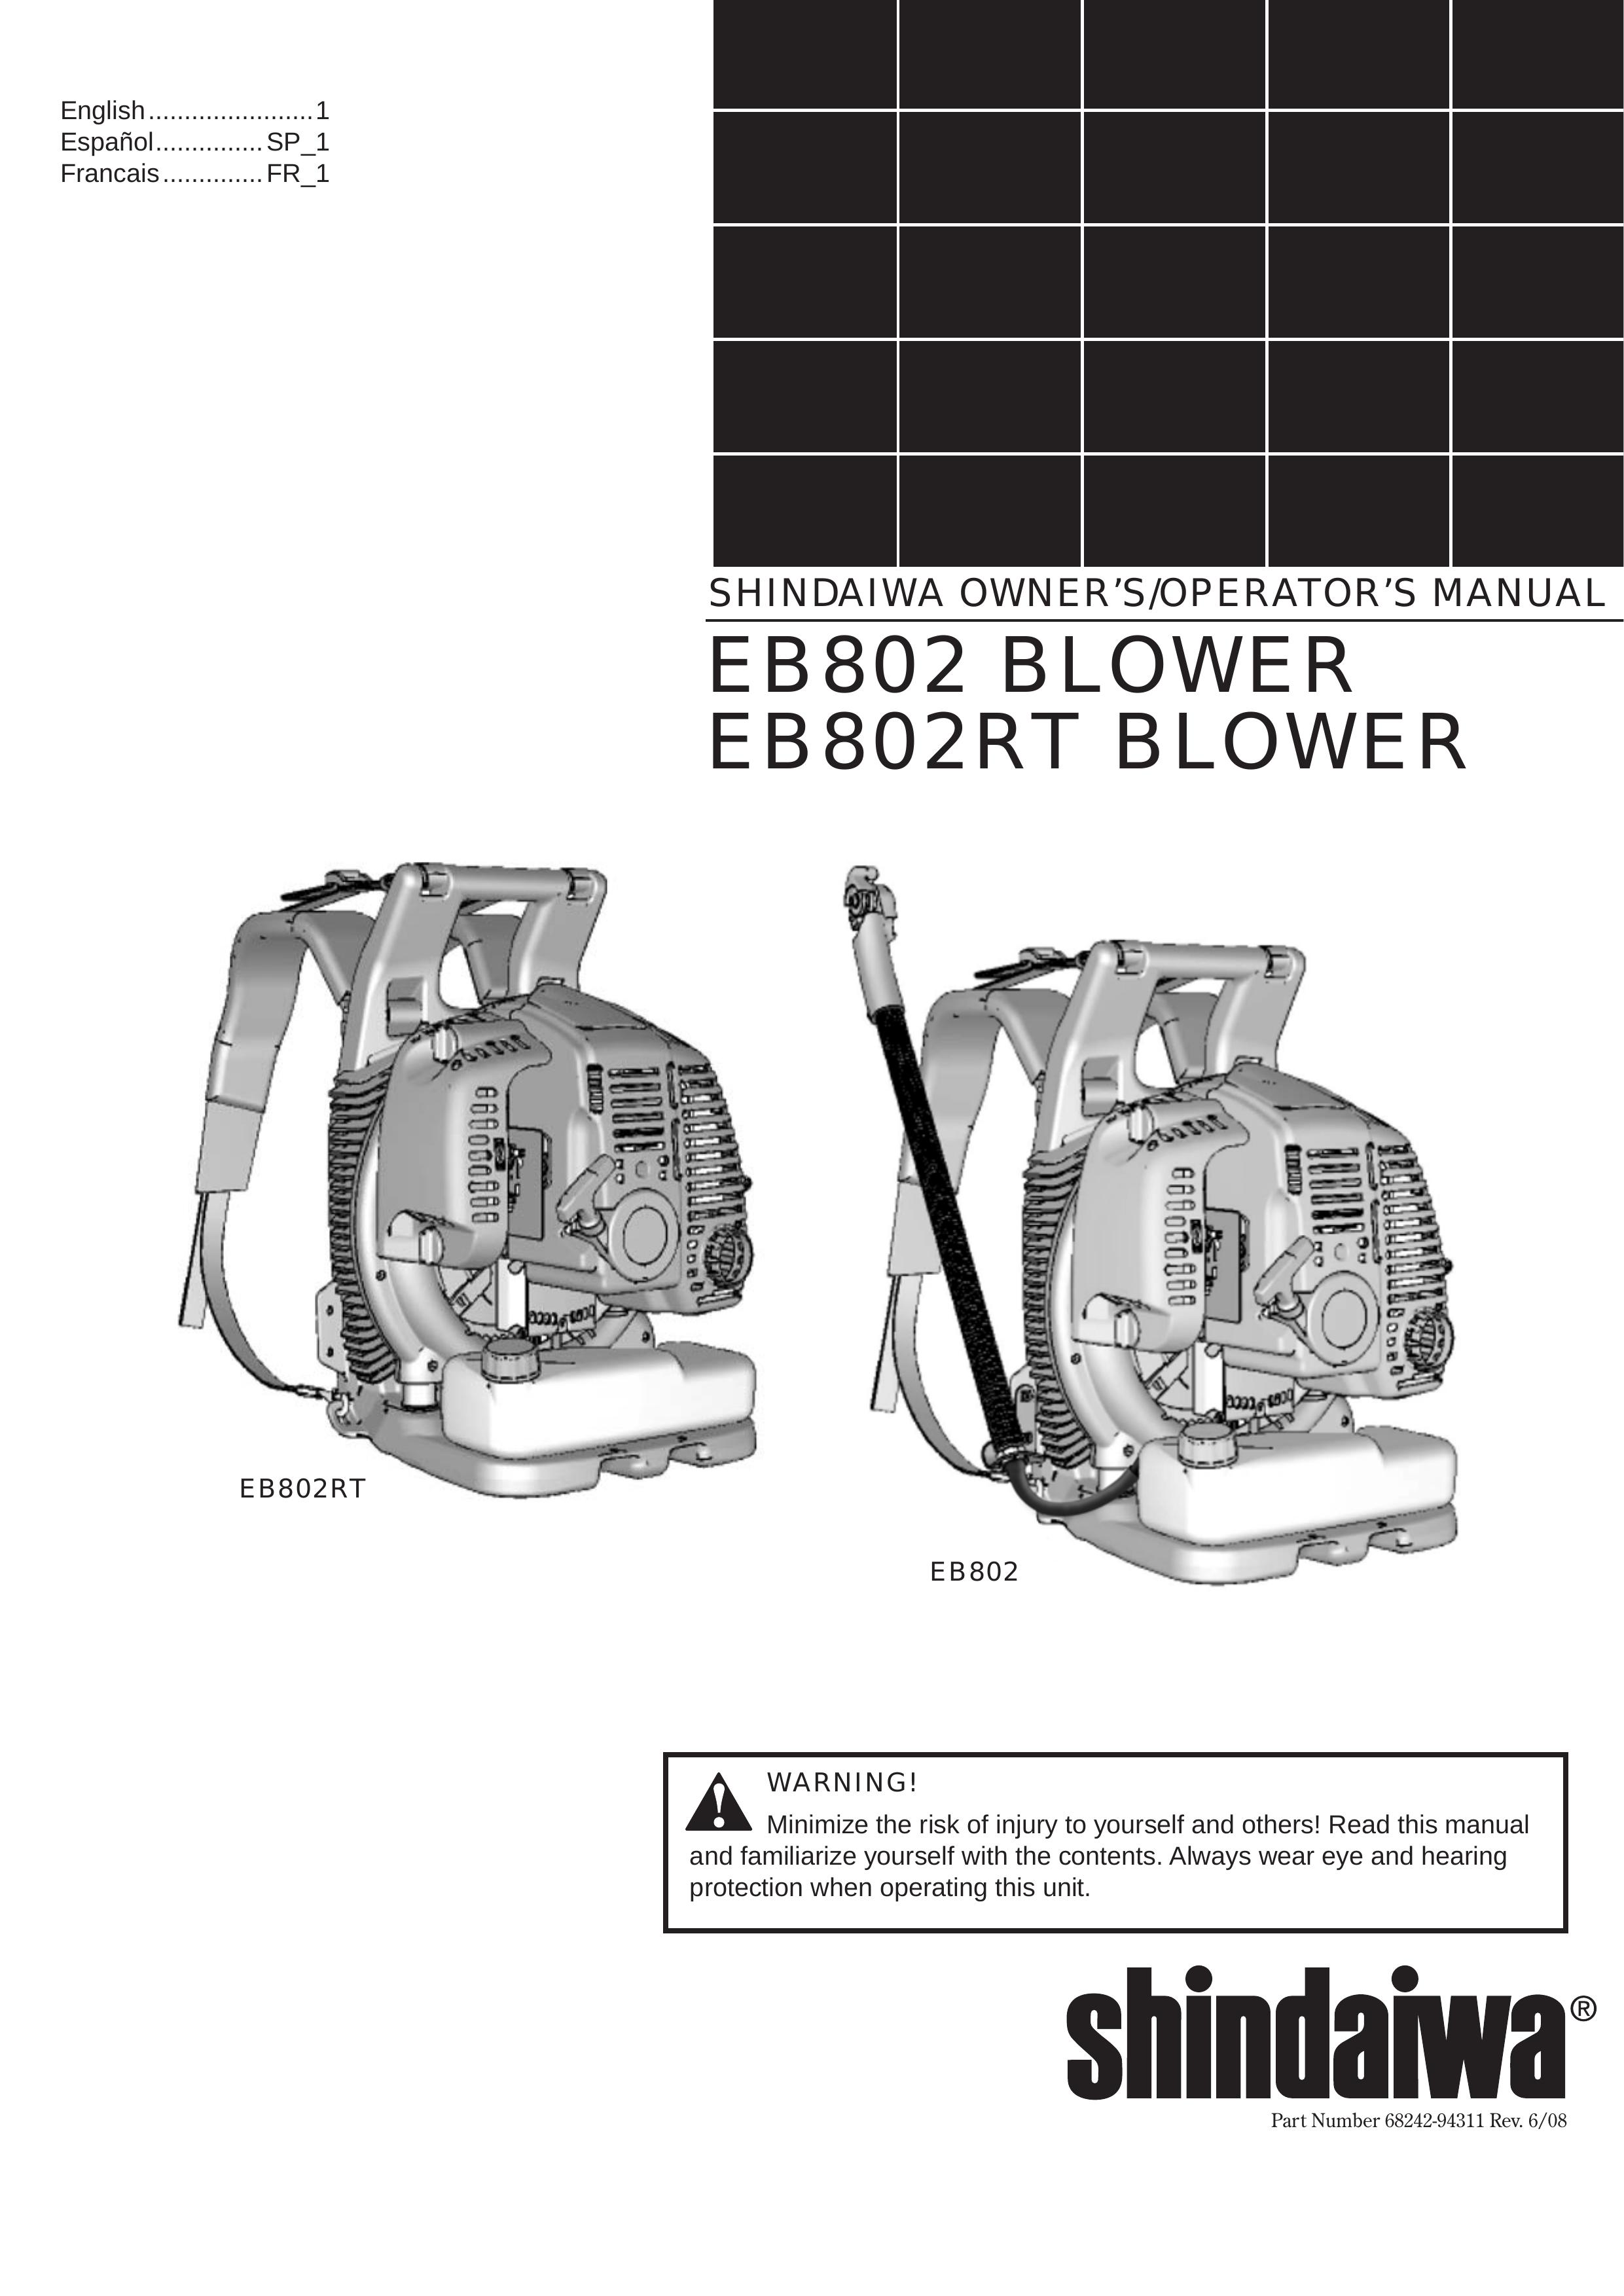 Shindaiwa 68242-94311 Blower User Manual